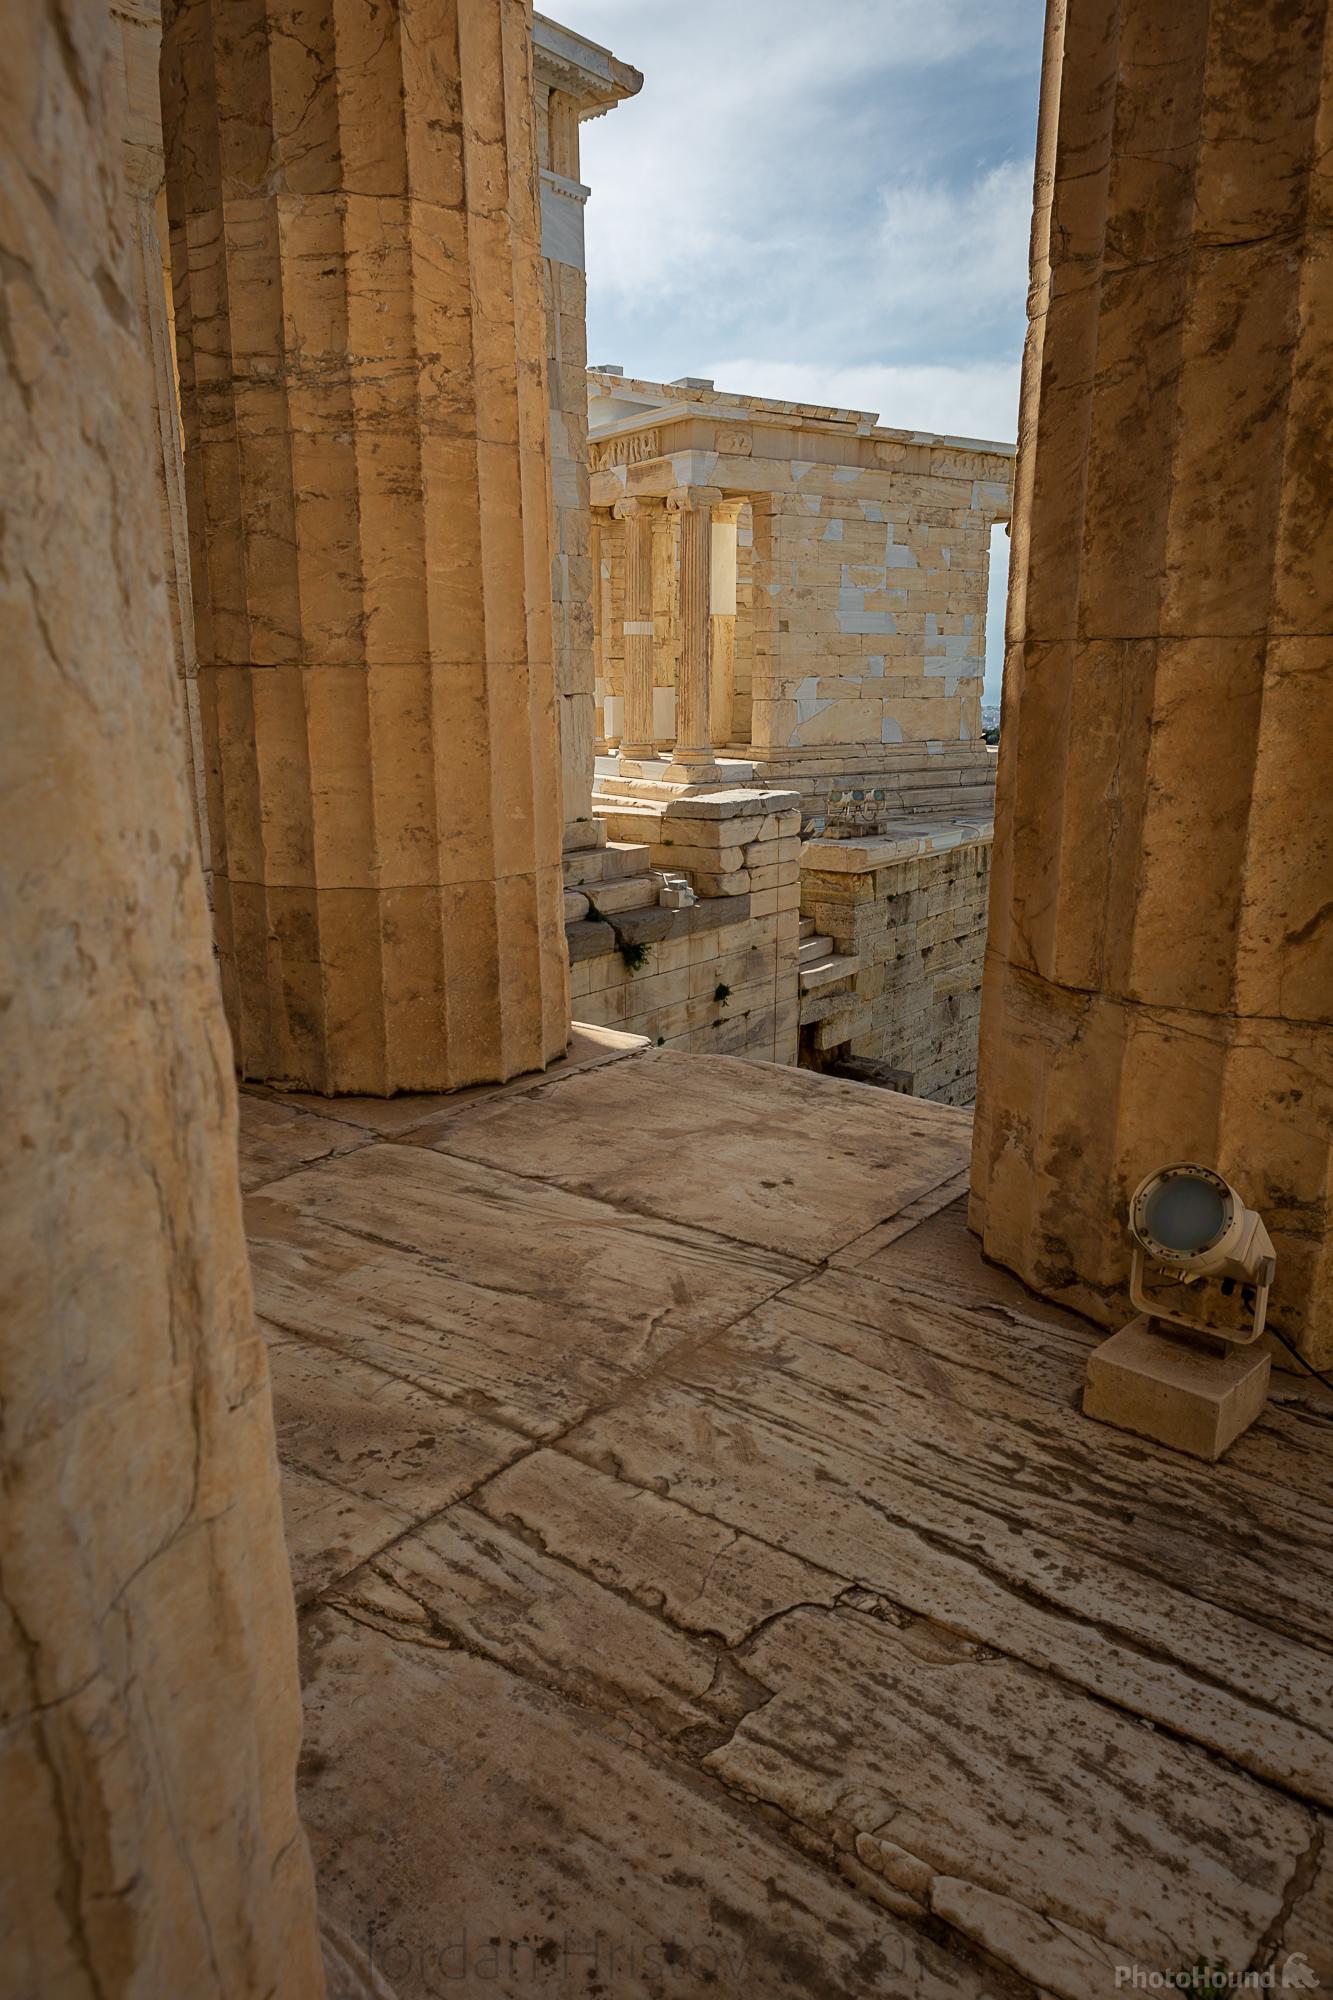 Image of Athens Acropolis by Dancho Hristov